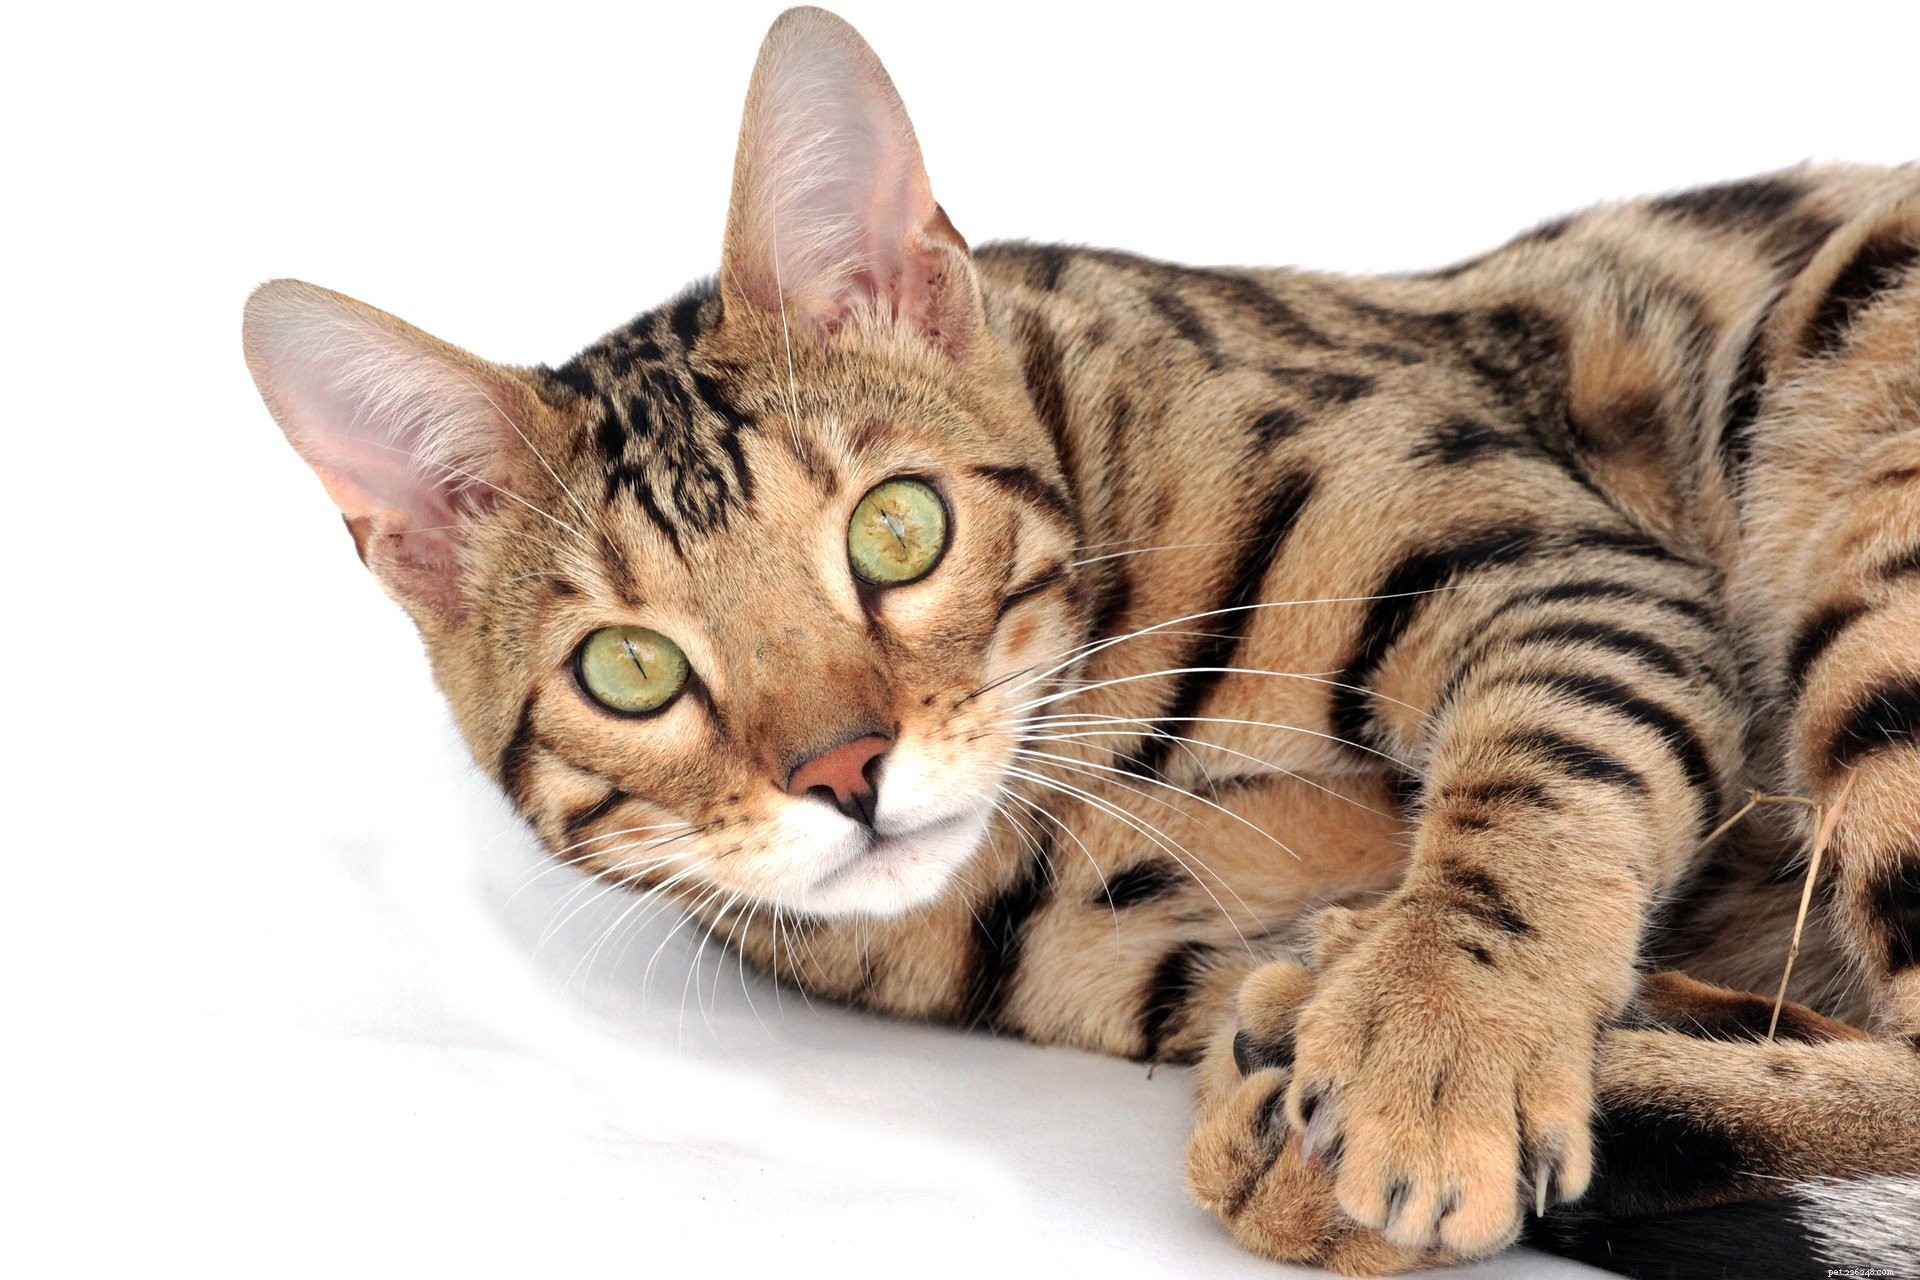 Medium kattenras:wat dacht je van een liefhebbend medium kattenras?